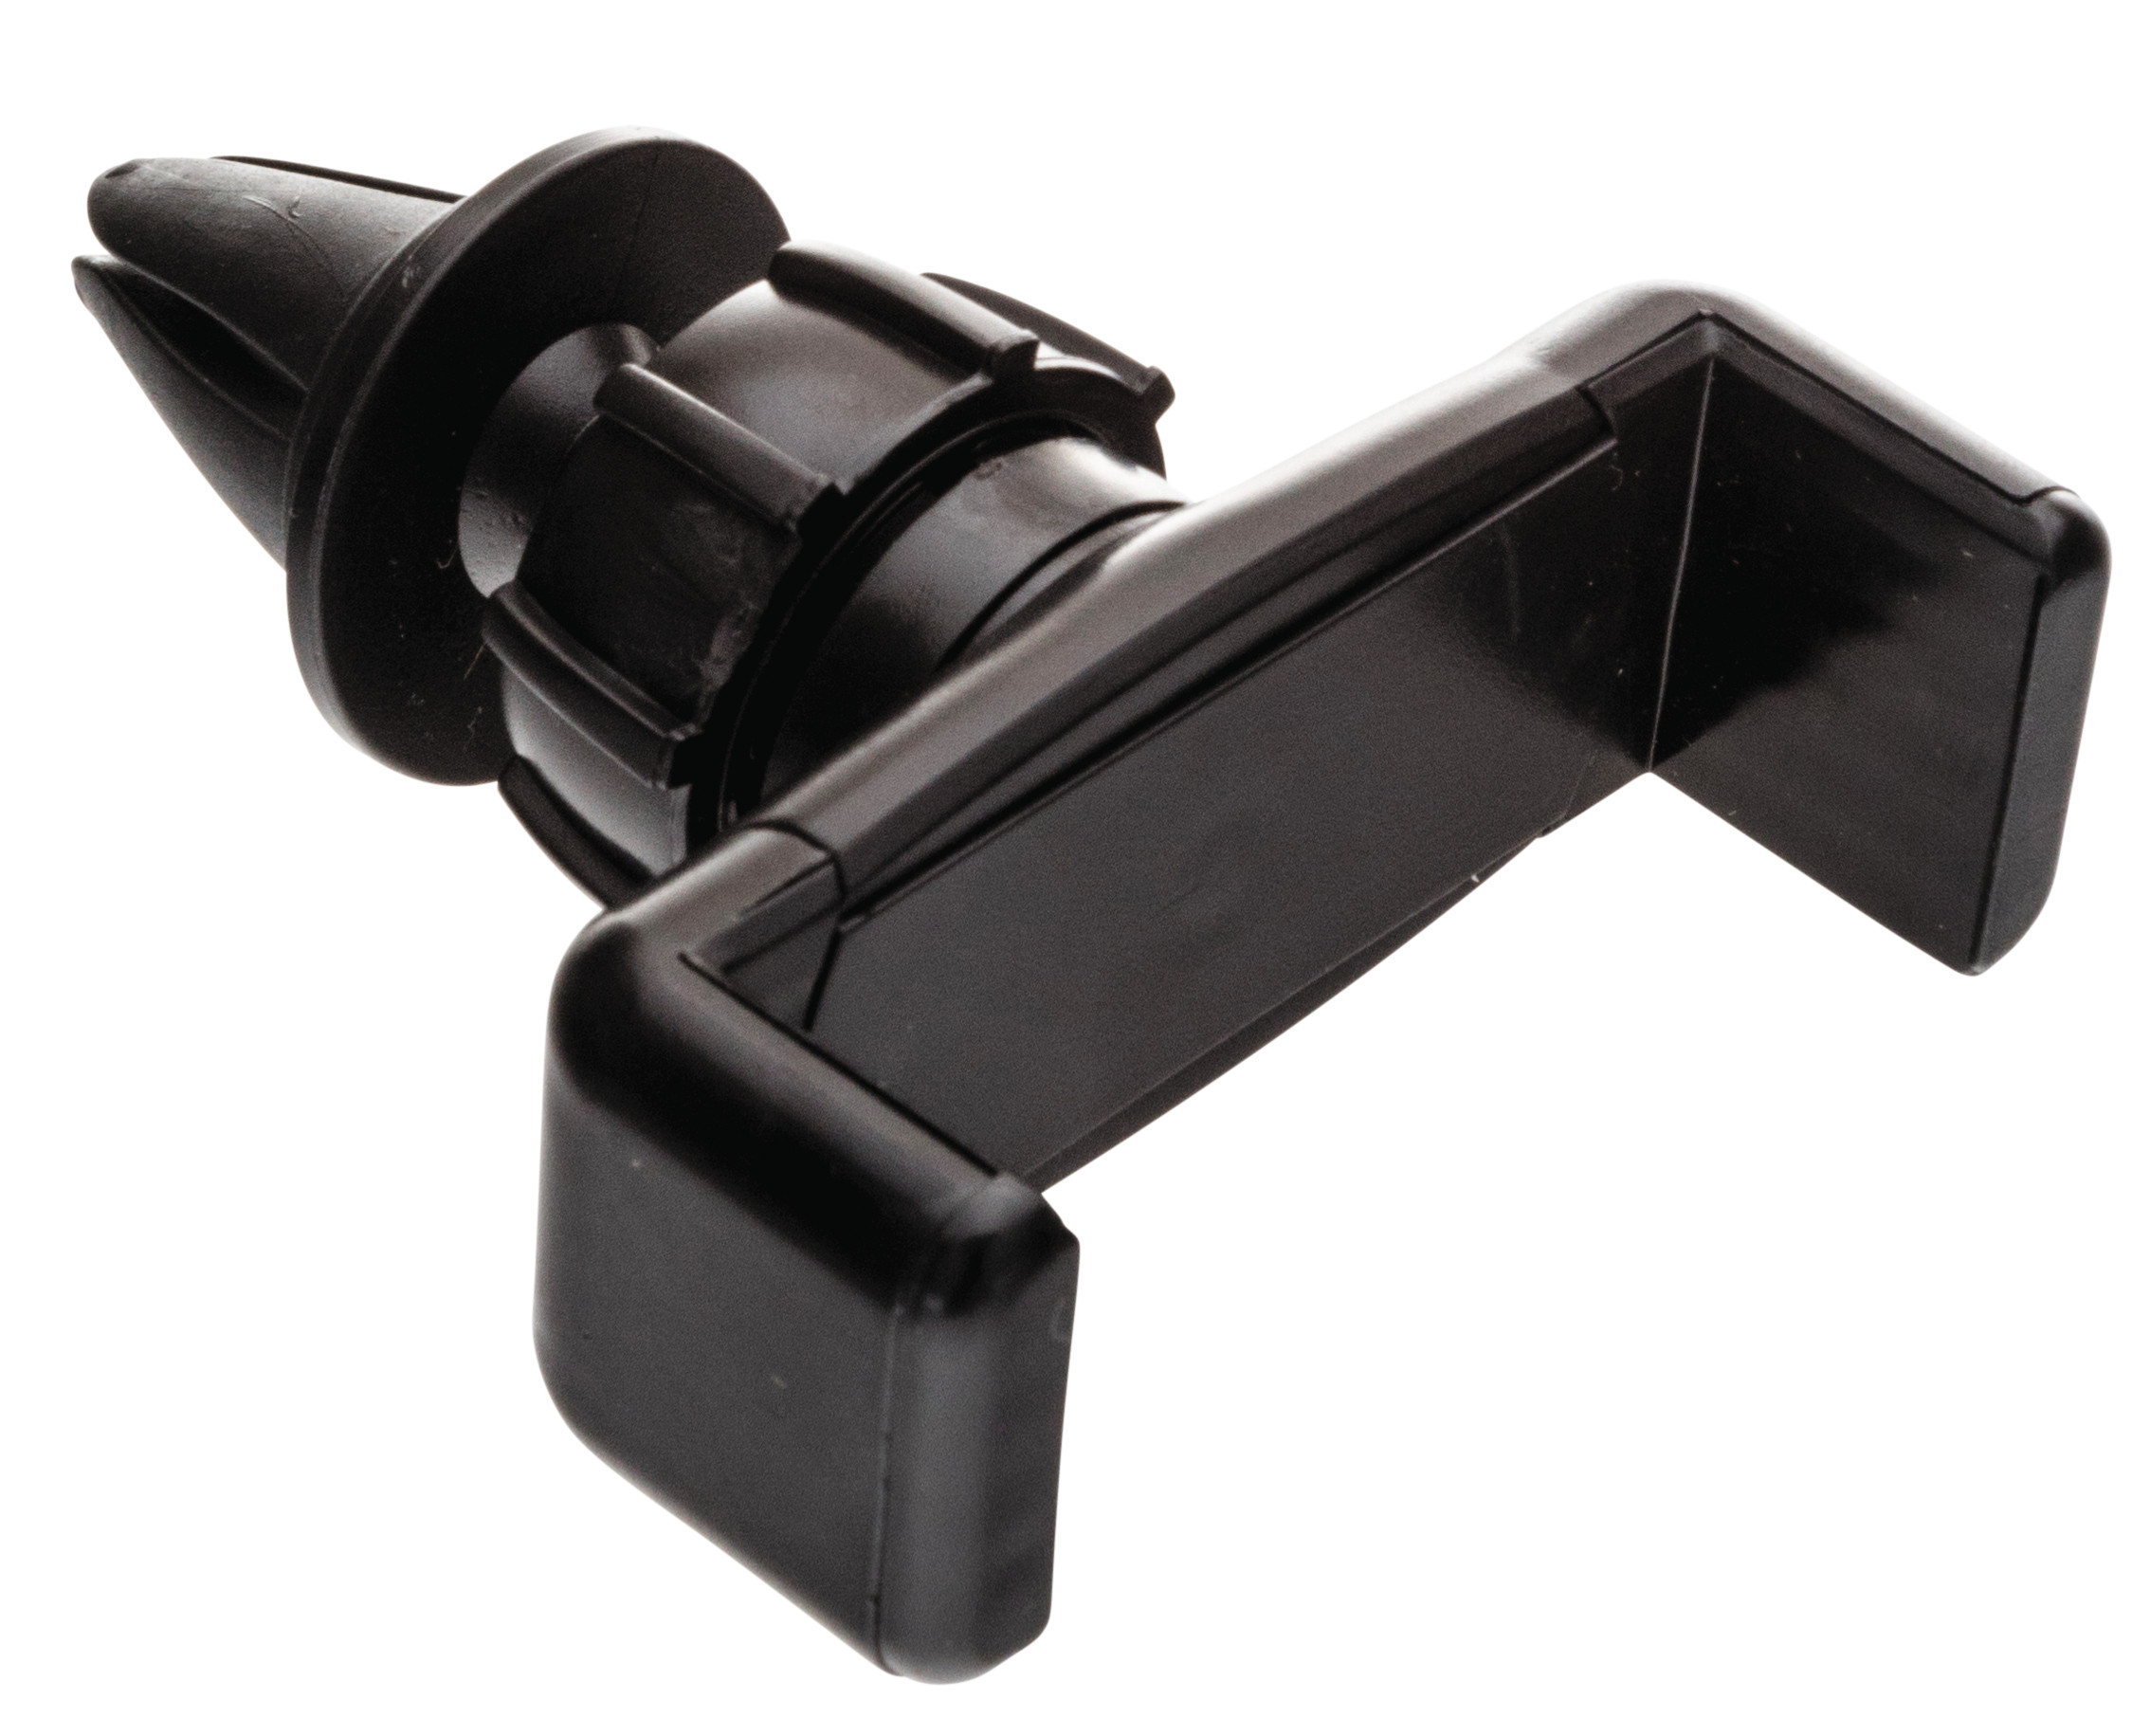 Car mount for air vent MOB:A expandable grip, black / 383223